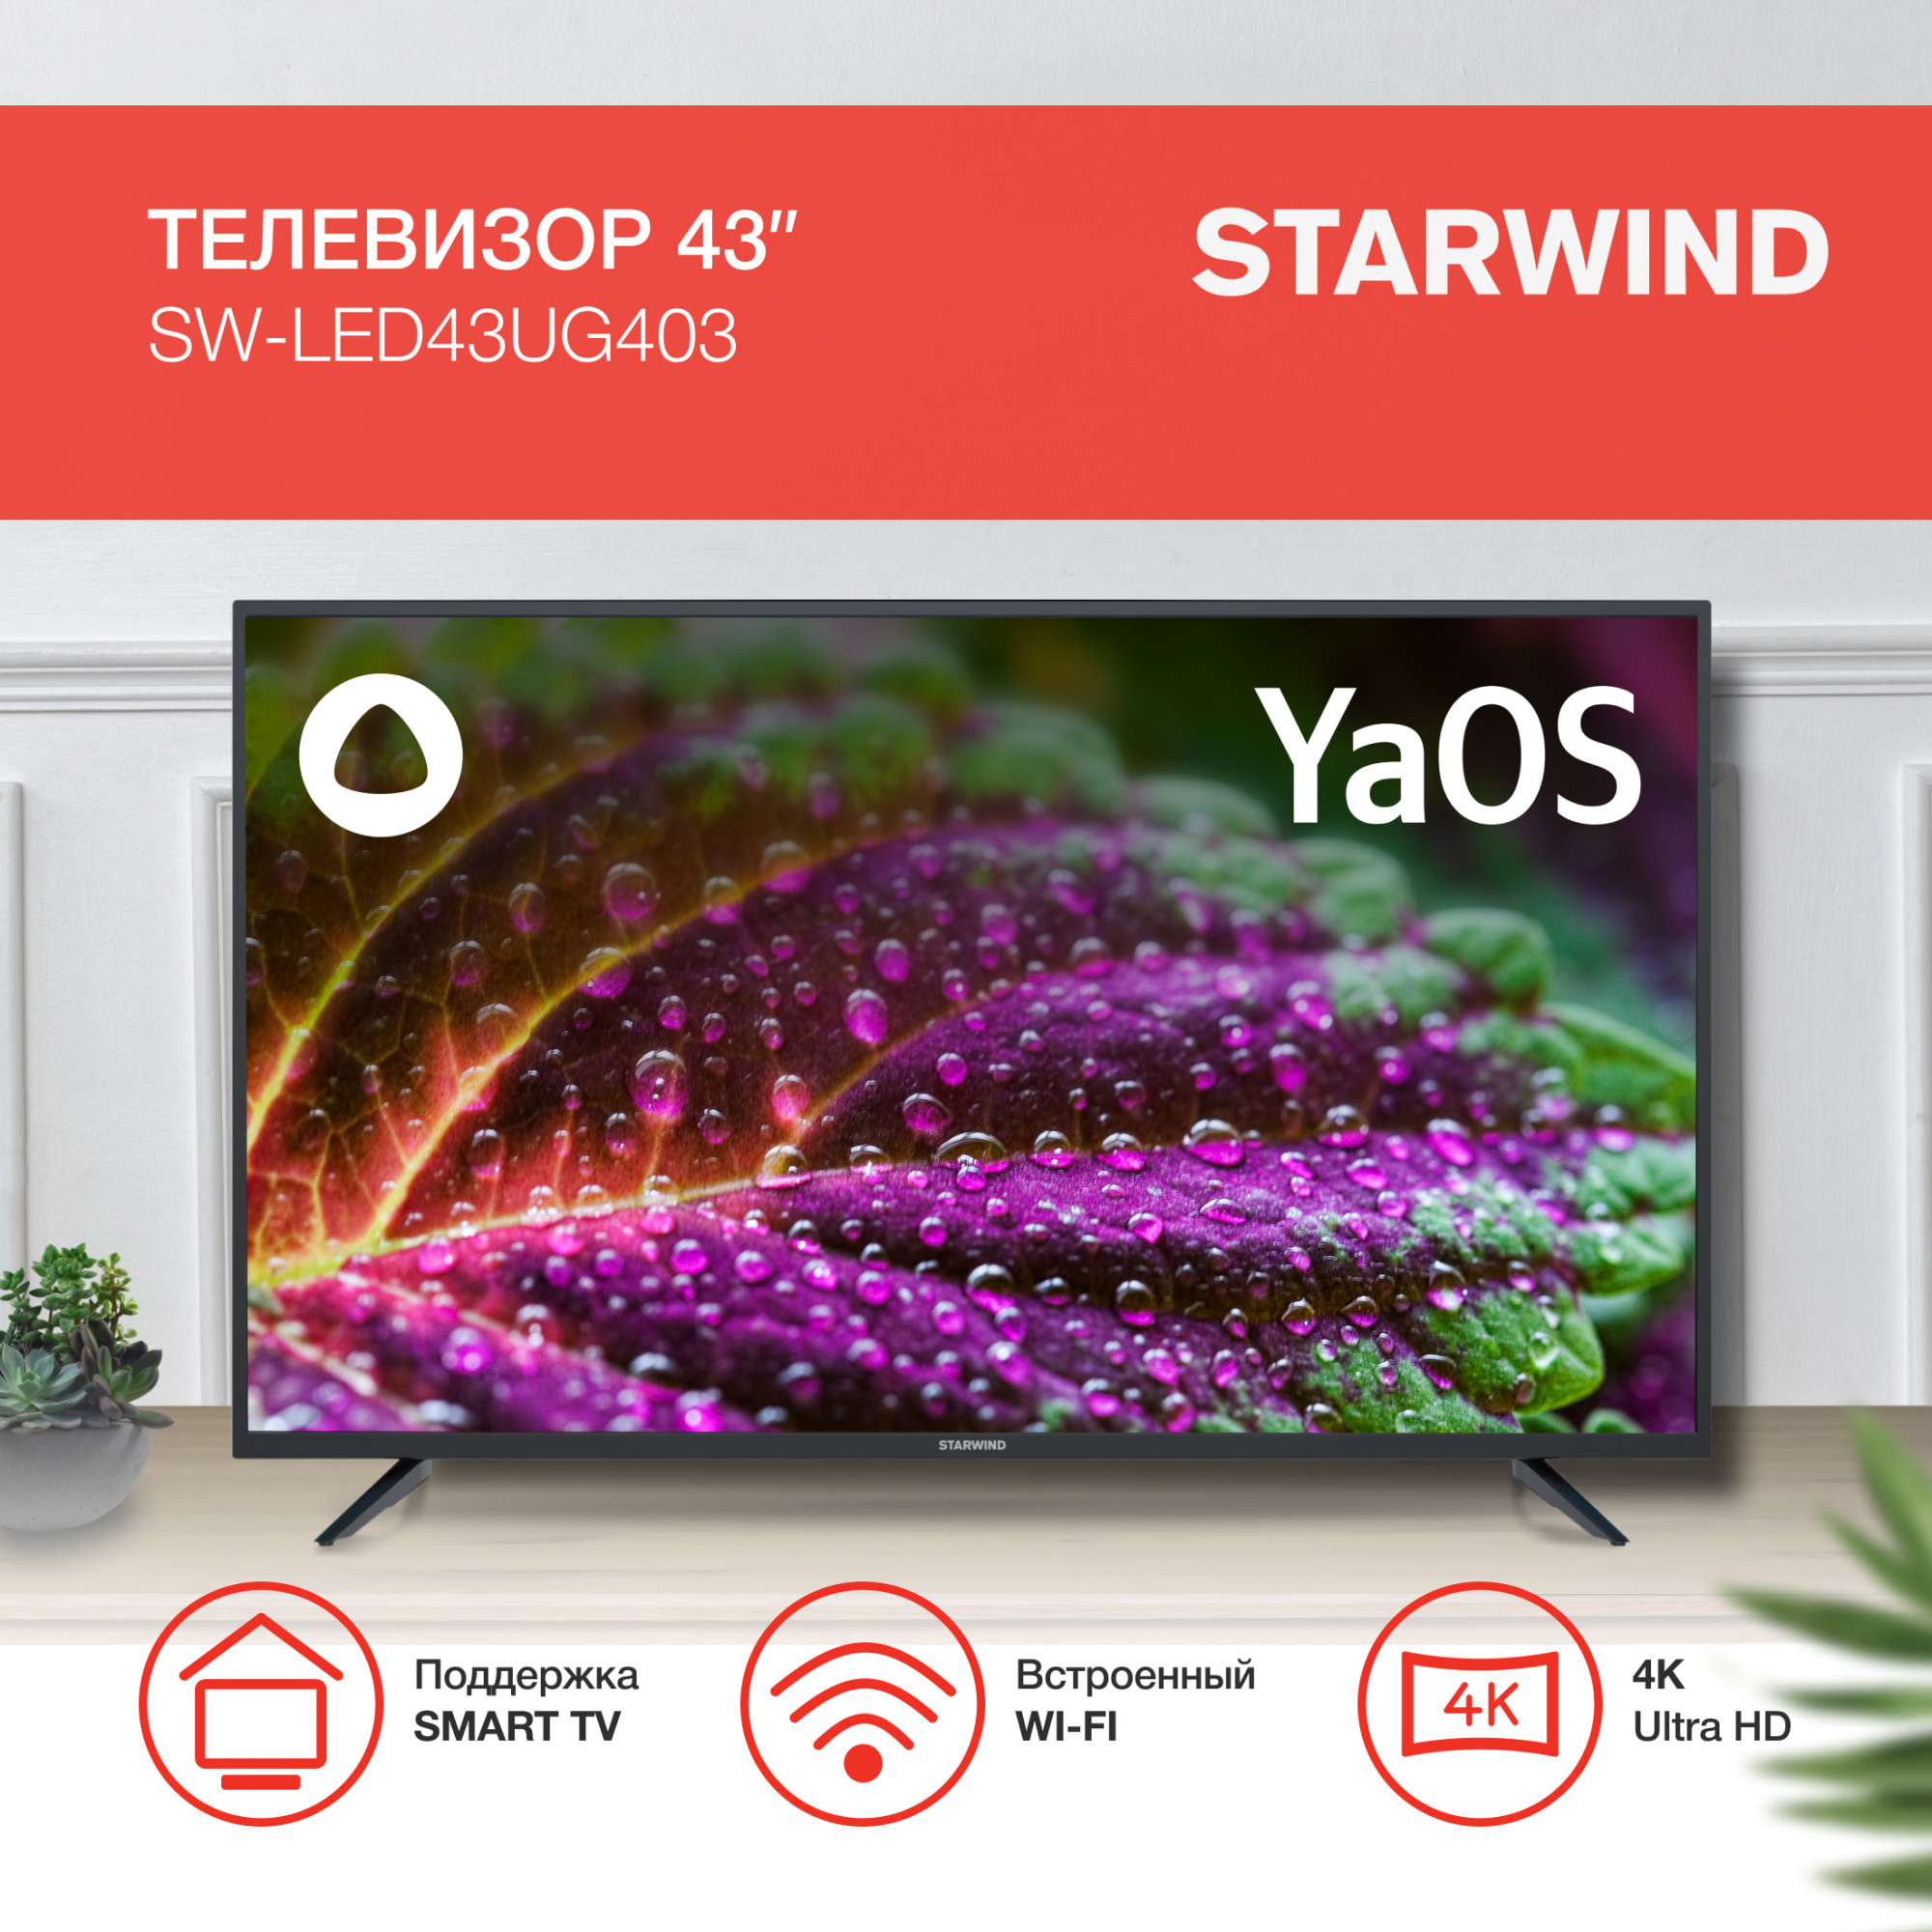 Купить телевизор starwind